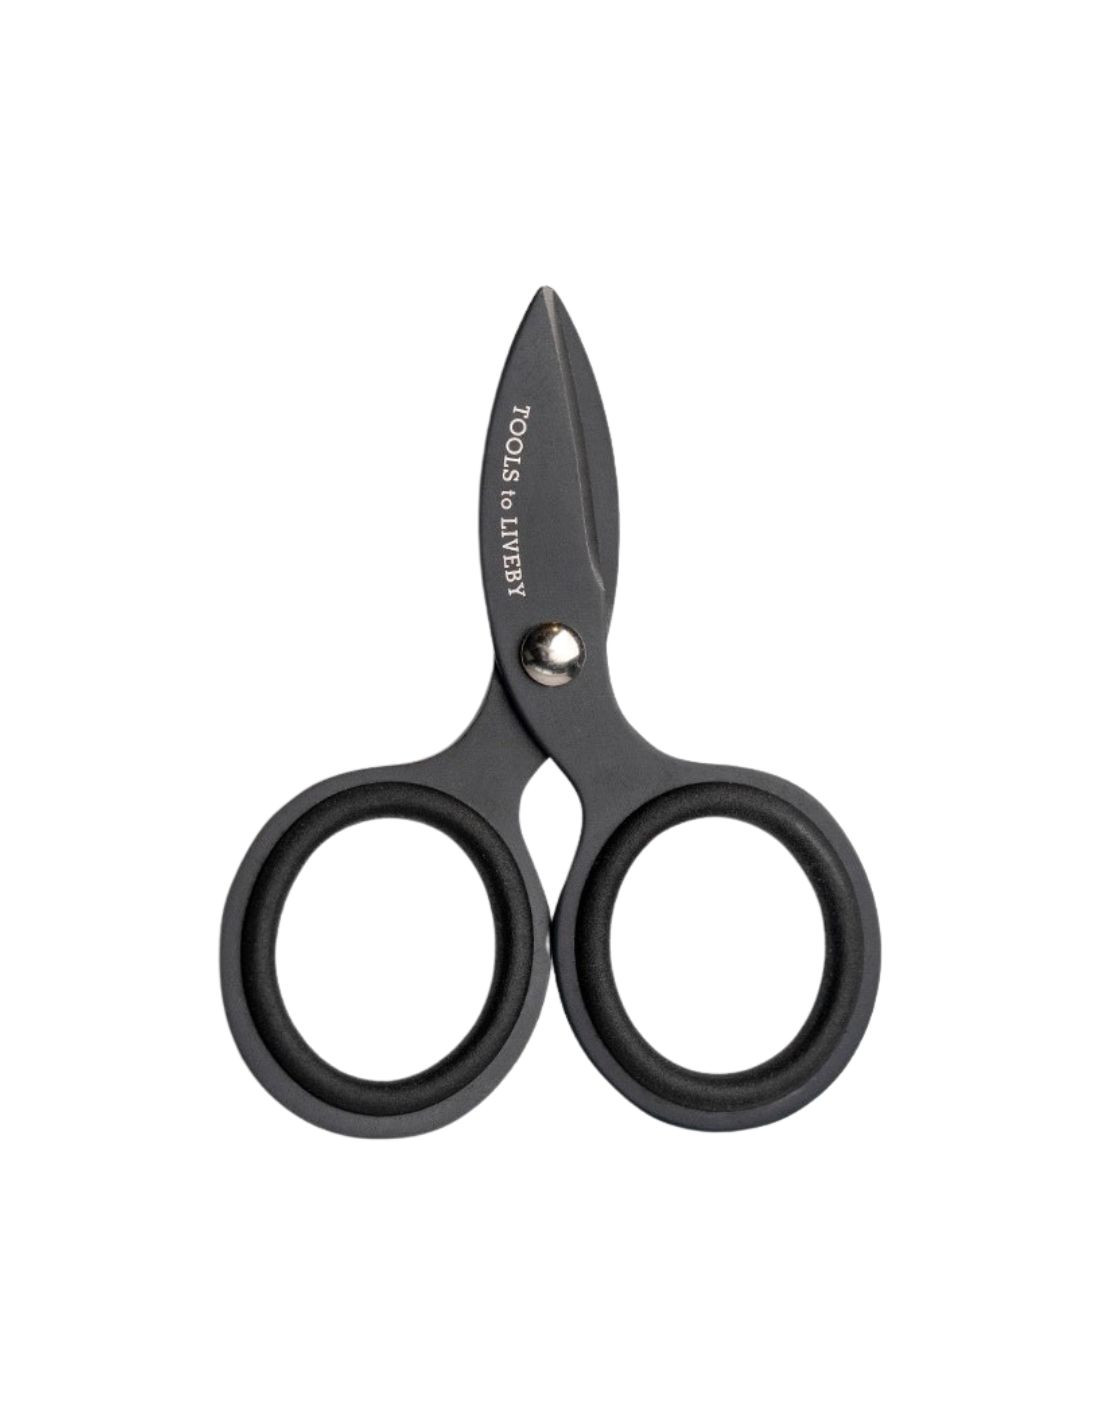 Tools To Liveby 3" Scissors - Black